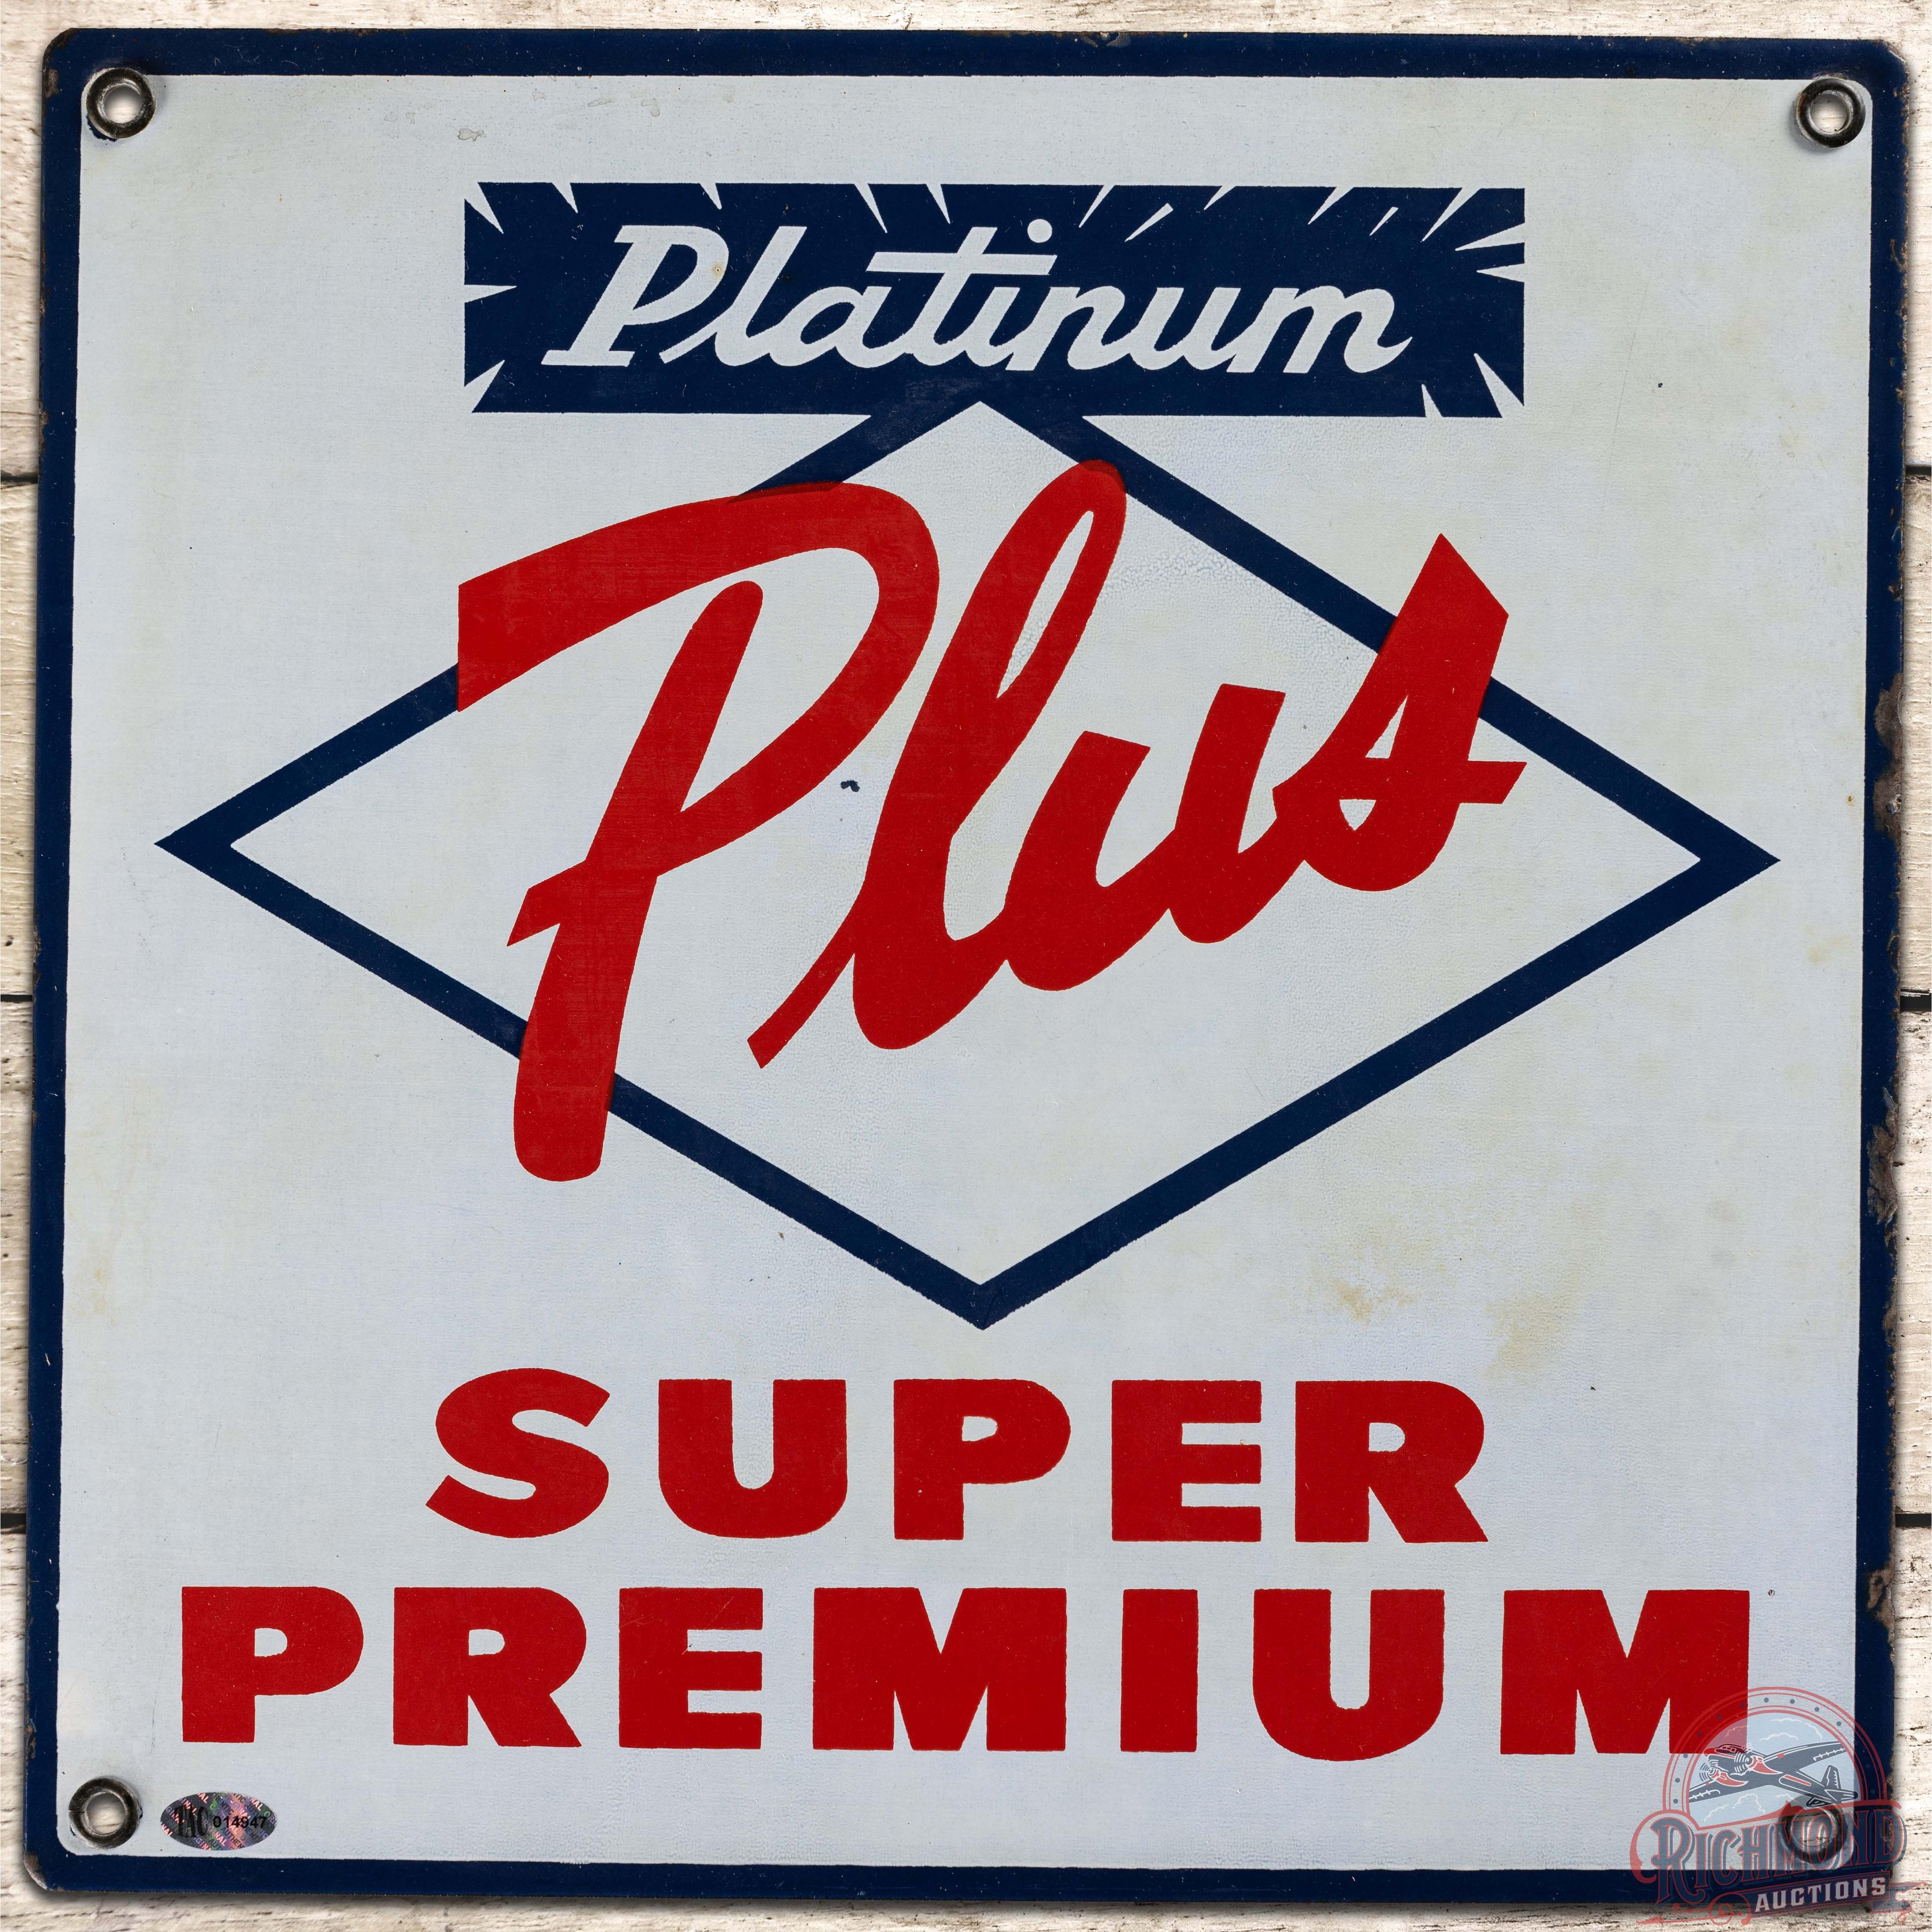 Platinum Plus Super Premium SS Porcelain Gas Pump Plate Sign